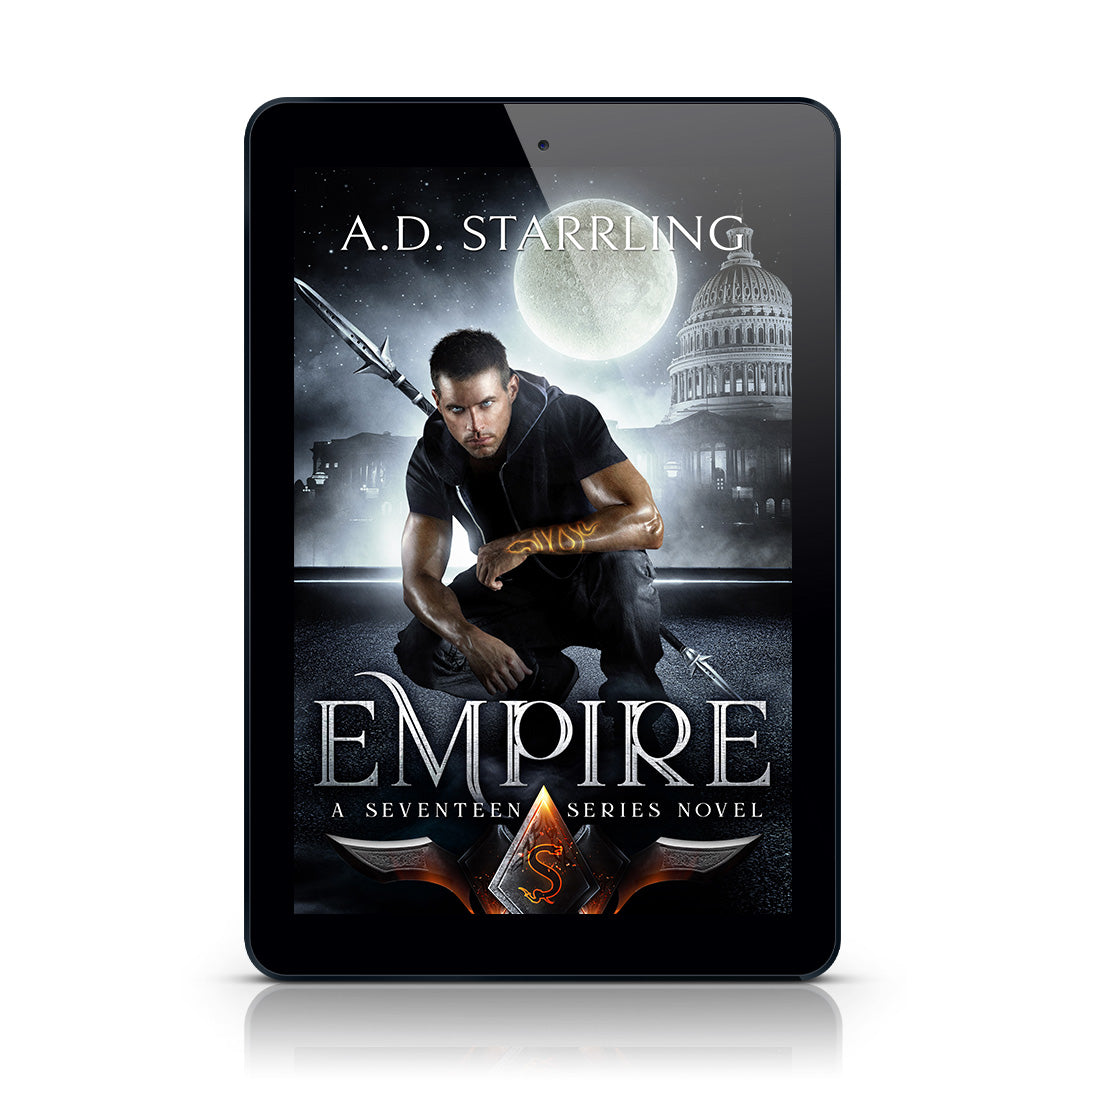 Empire (Seventeen Series Book 3) EBOOK supernatural thriller urban fantasy author ad starrling